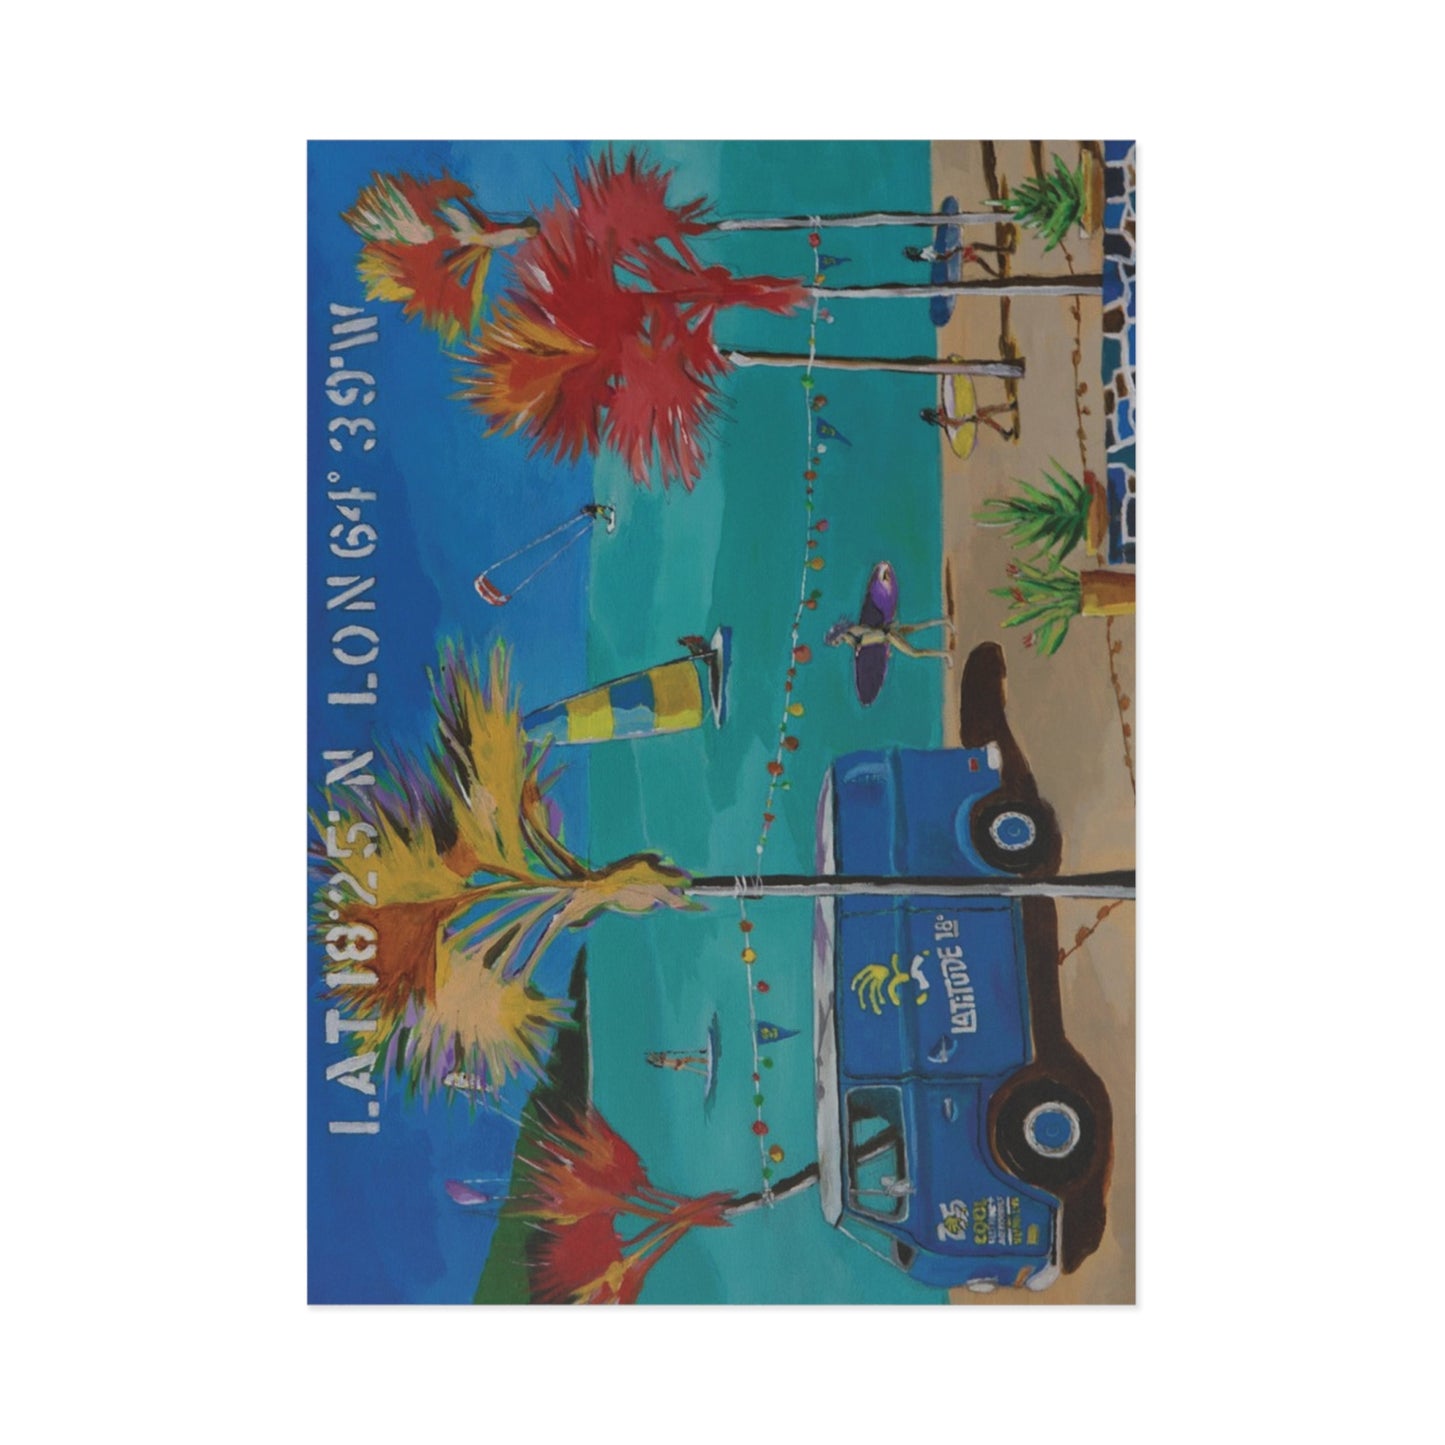 “BVI Beach Vibes” by Jim McManus 7" x 5" Postcard